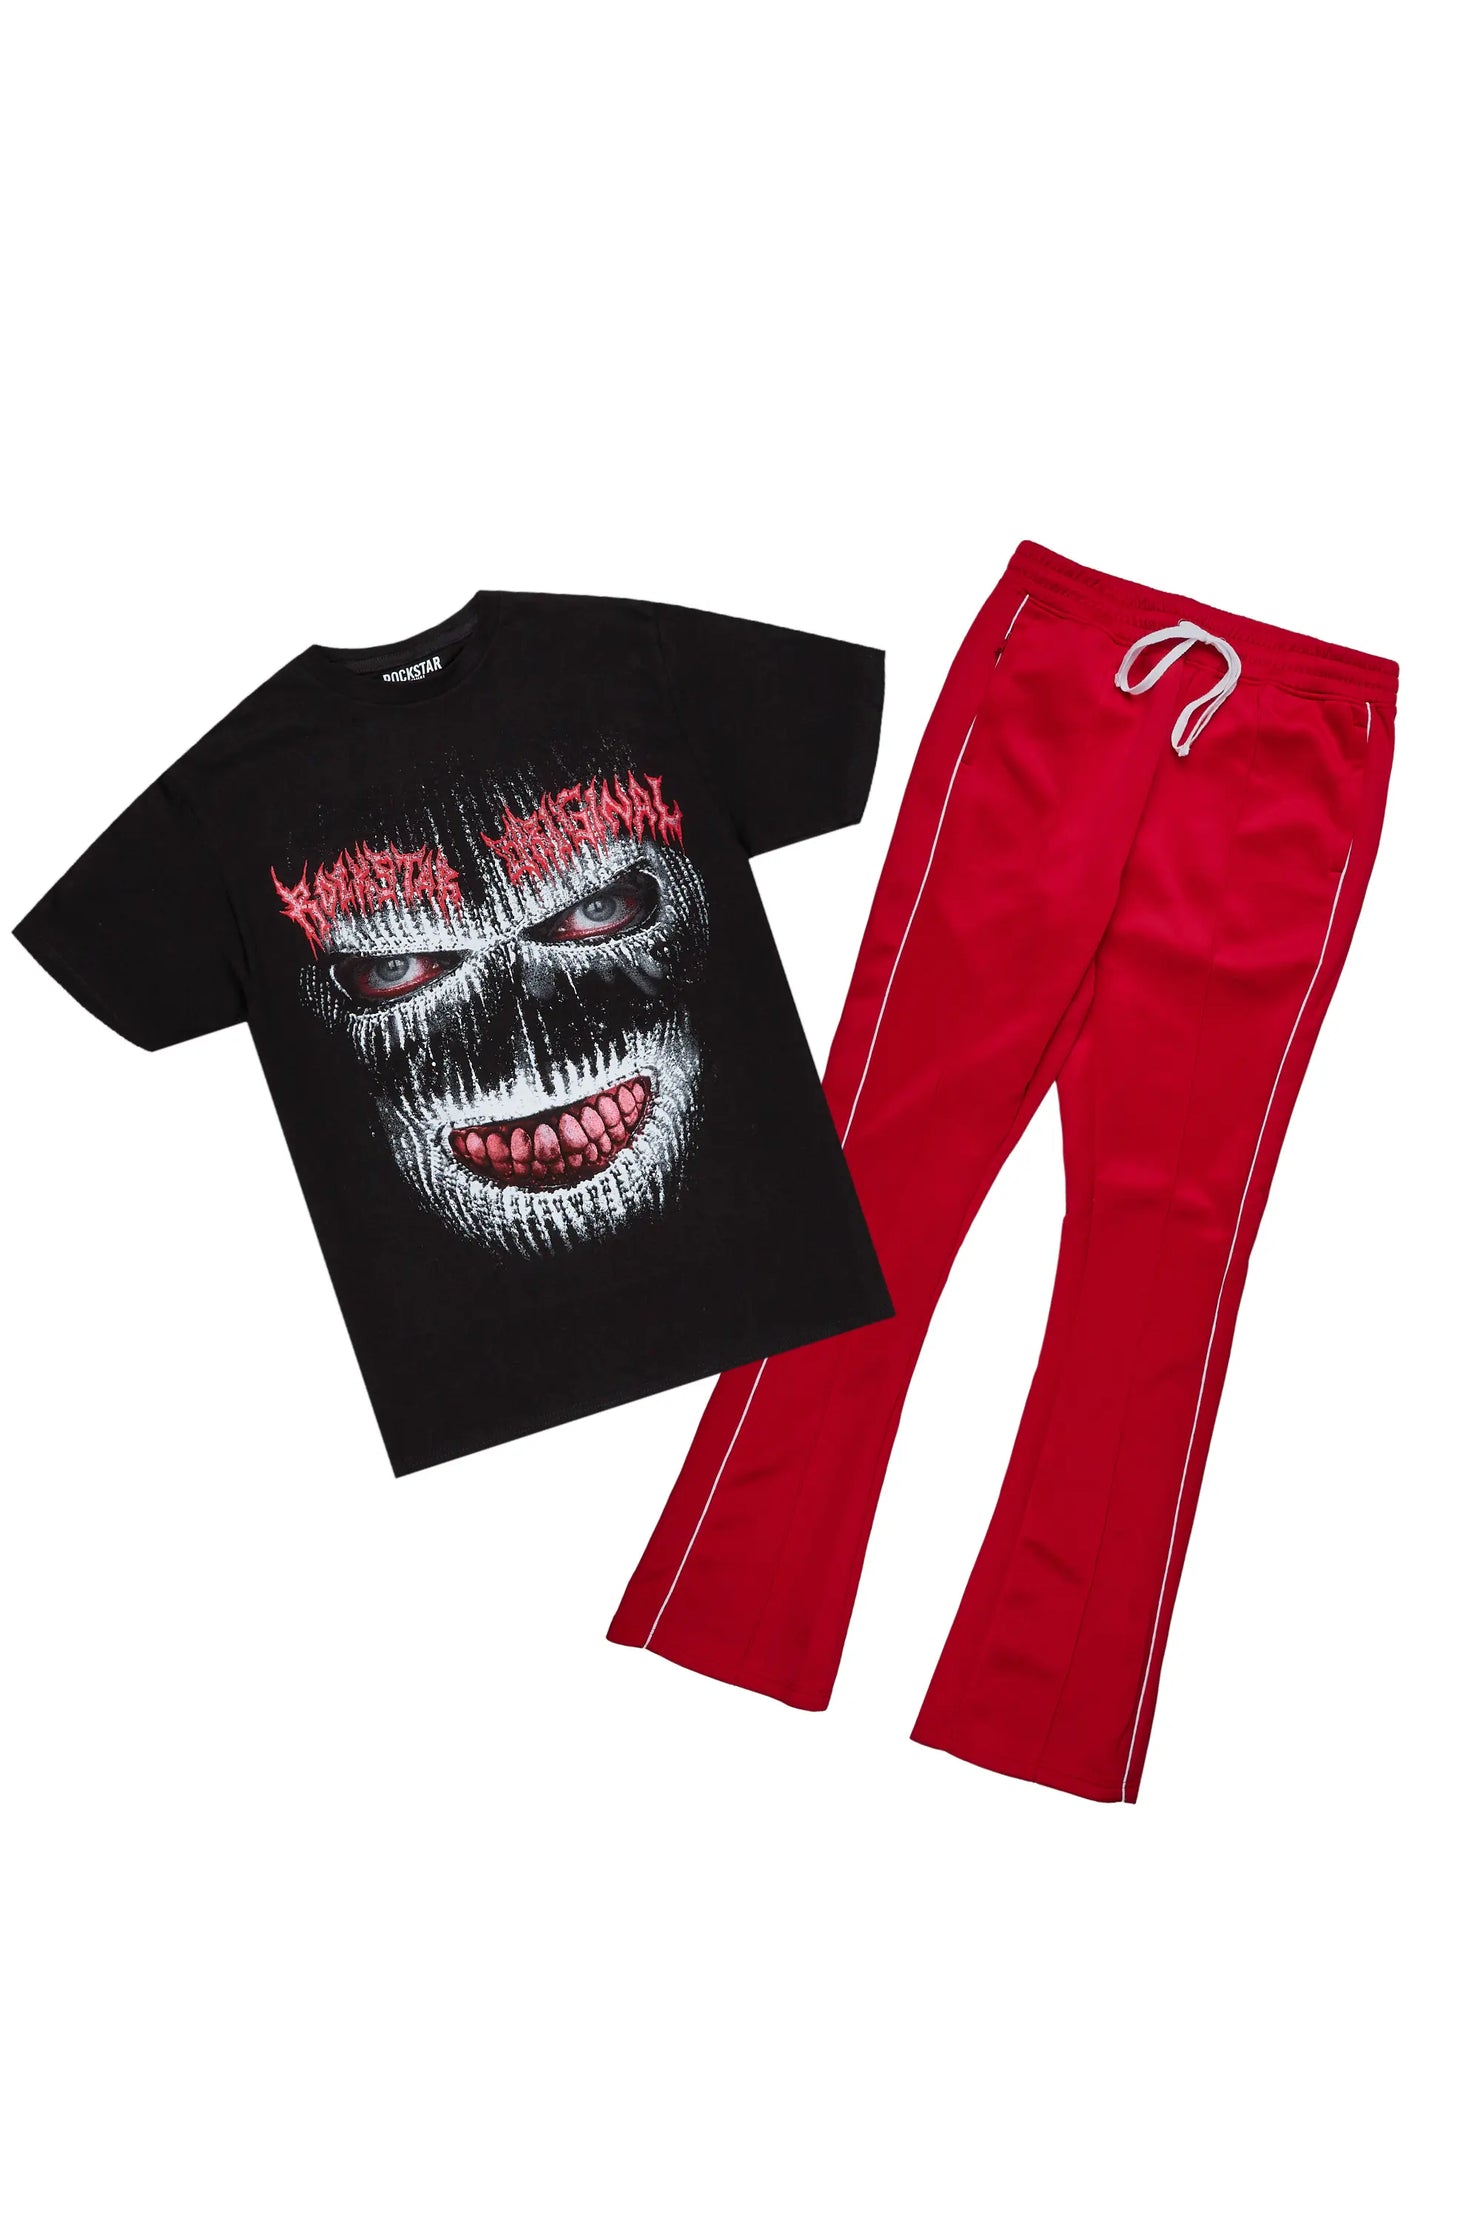 Monstre Black/Red T-Shirt/Stacked Track Set